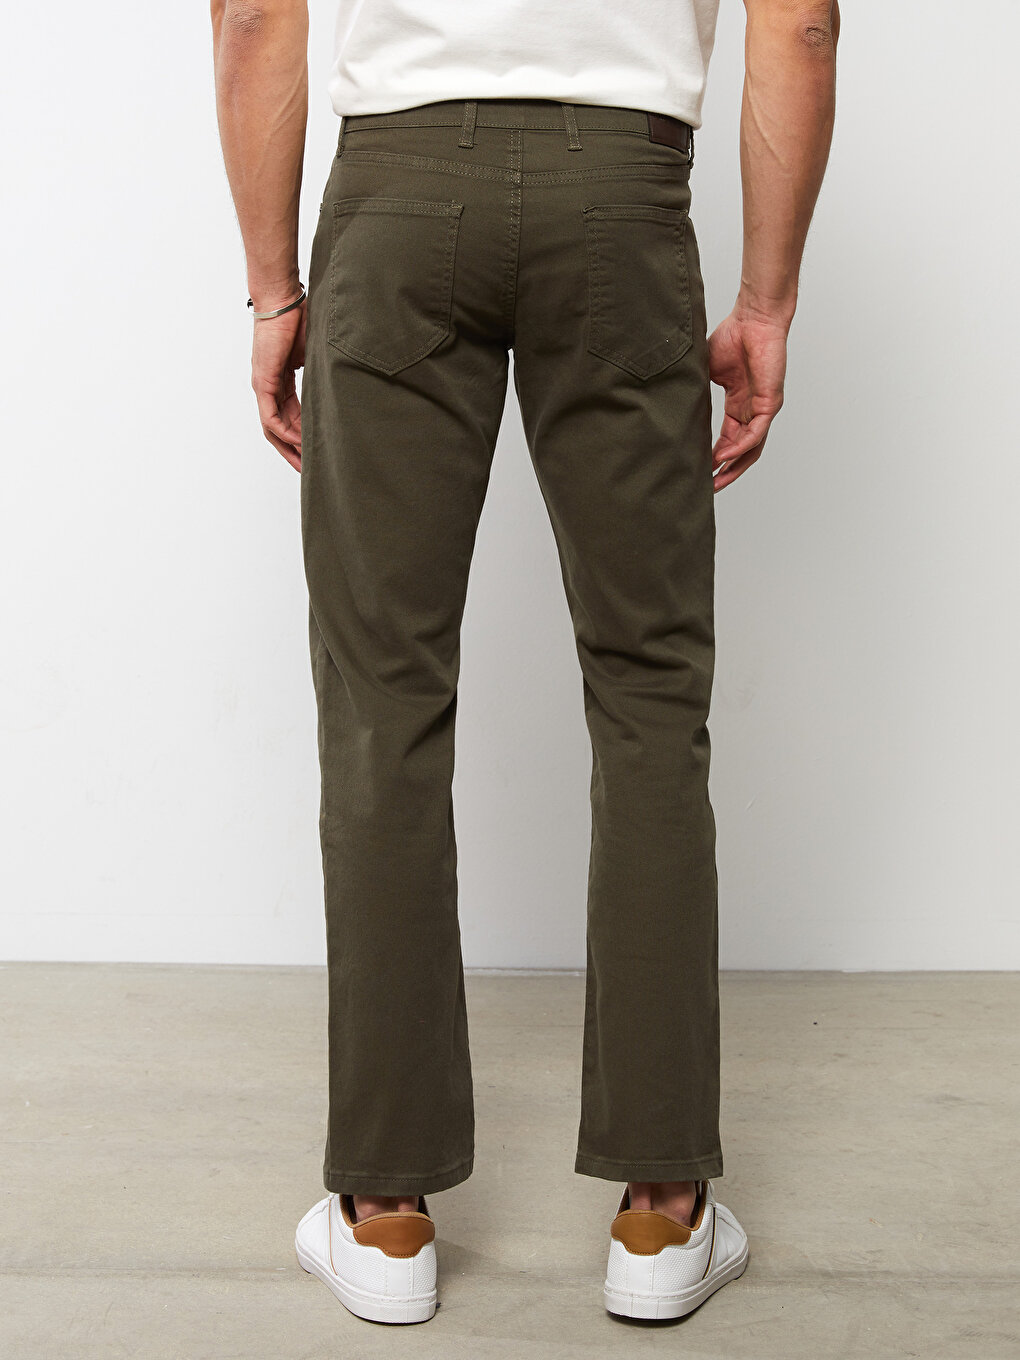 Standard Pattern Men's Chino Trousers -S20667Z8-S2Q - S20667Z8-S2Q - LC ...